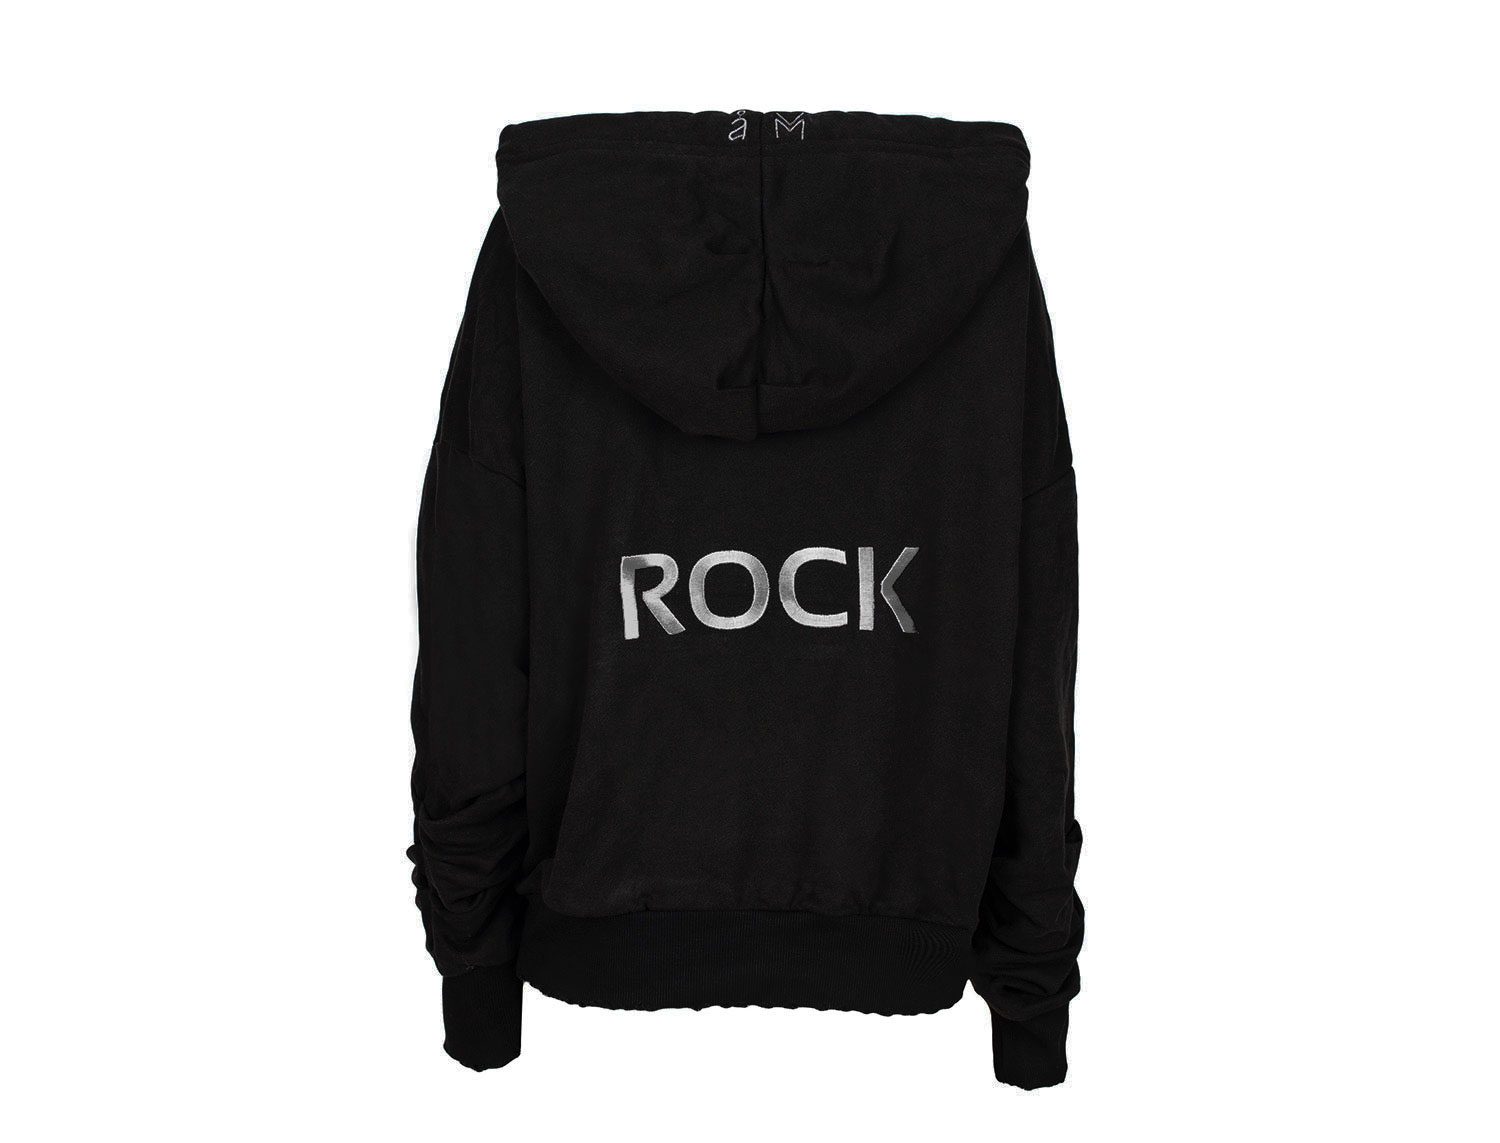 Black “Rock” Zipper hoodie